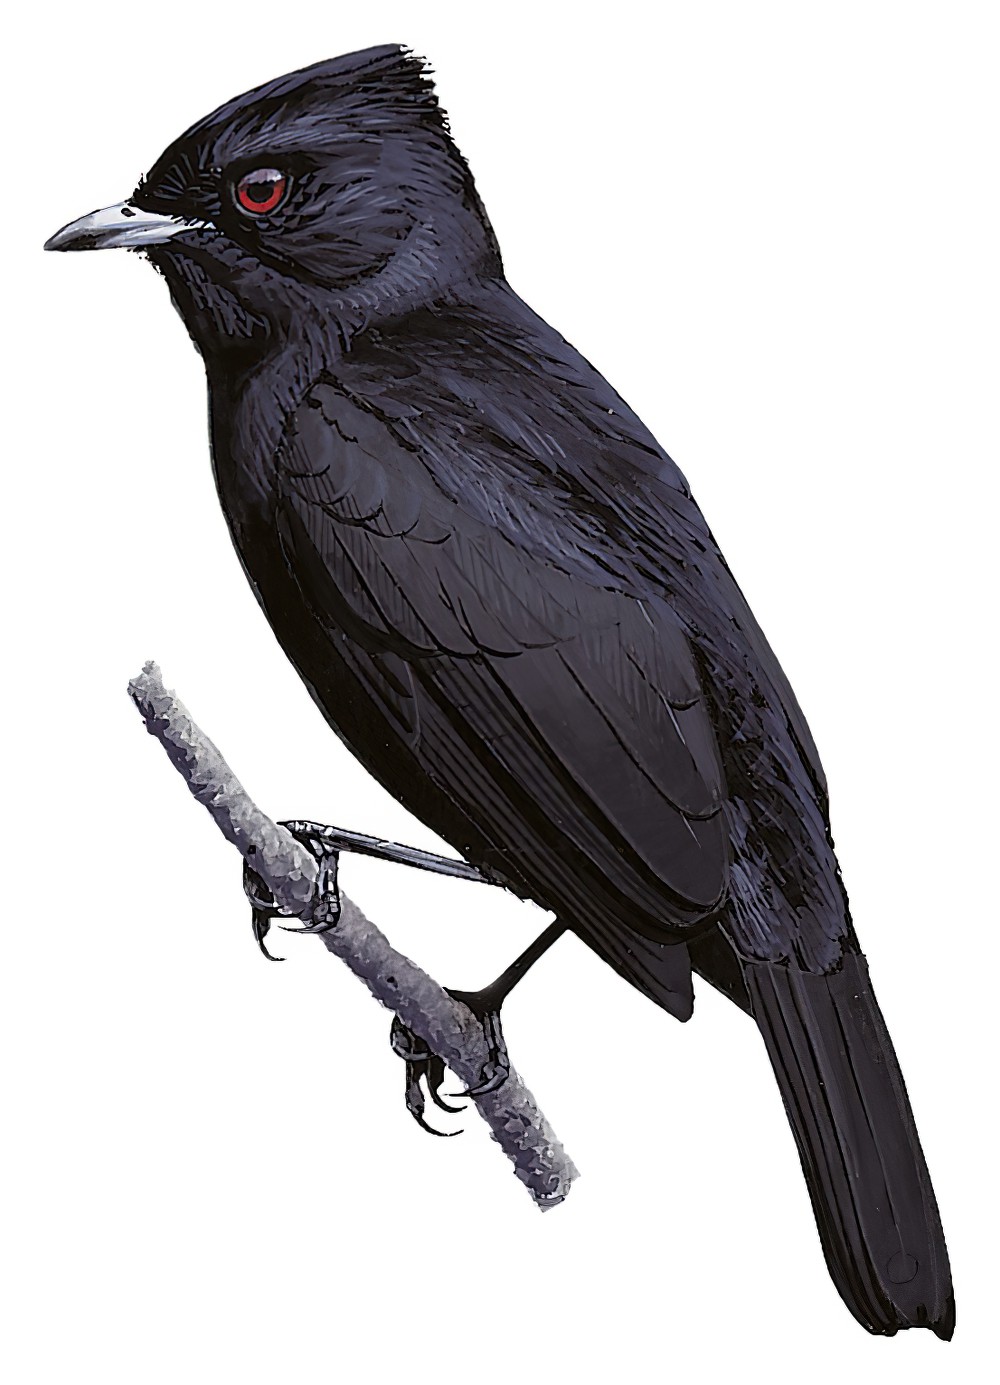 Velvety Black-Tyrant / Knipolegus nigerrimus